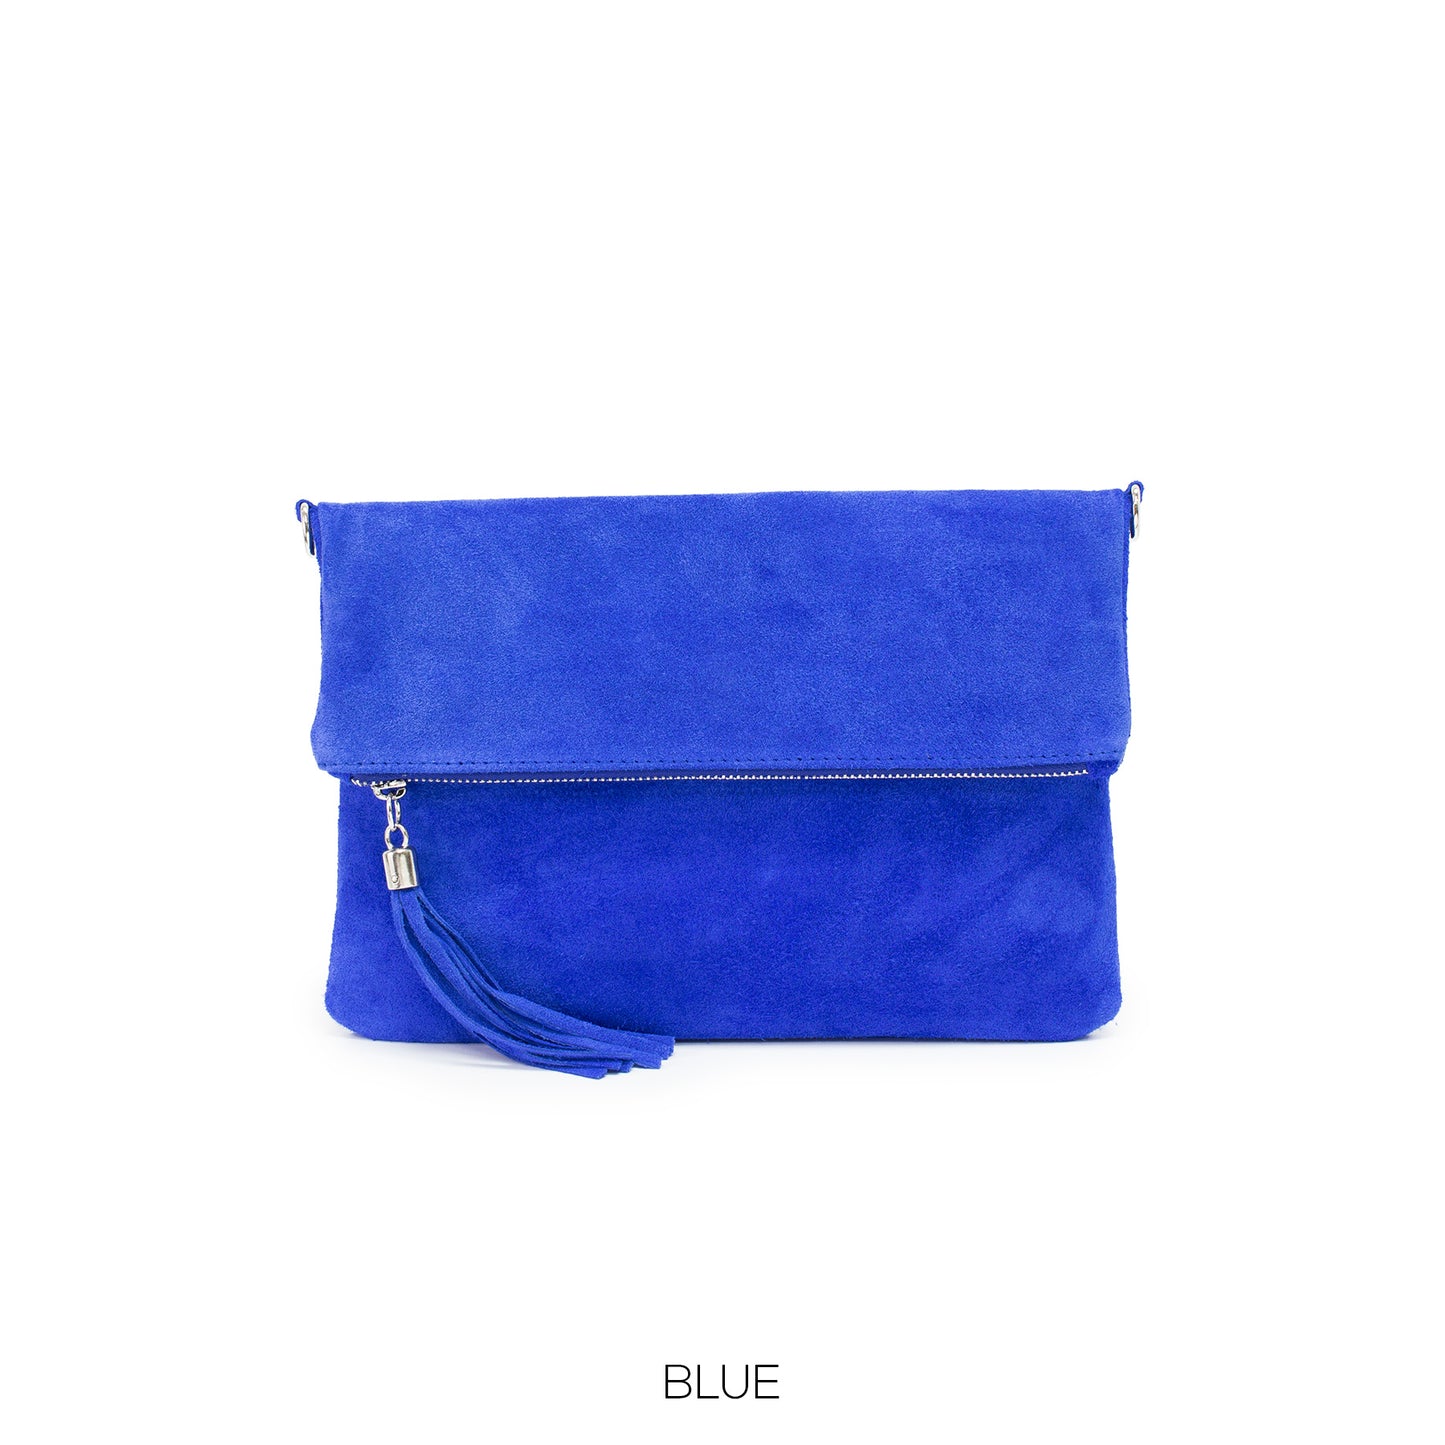 Royal Blue Suede Clutch Bag